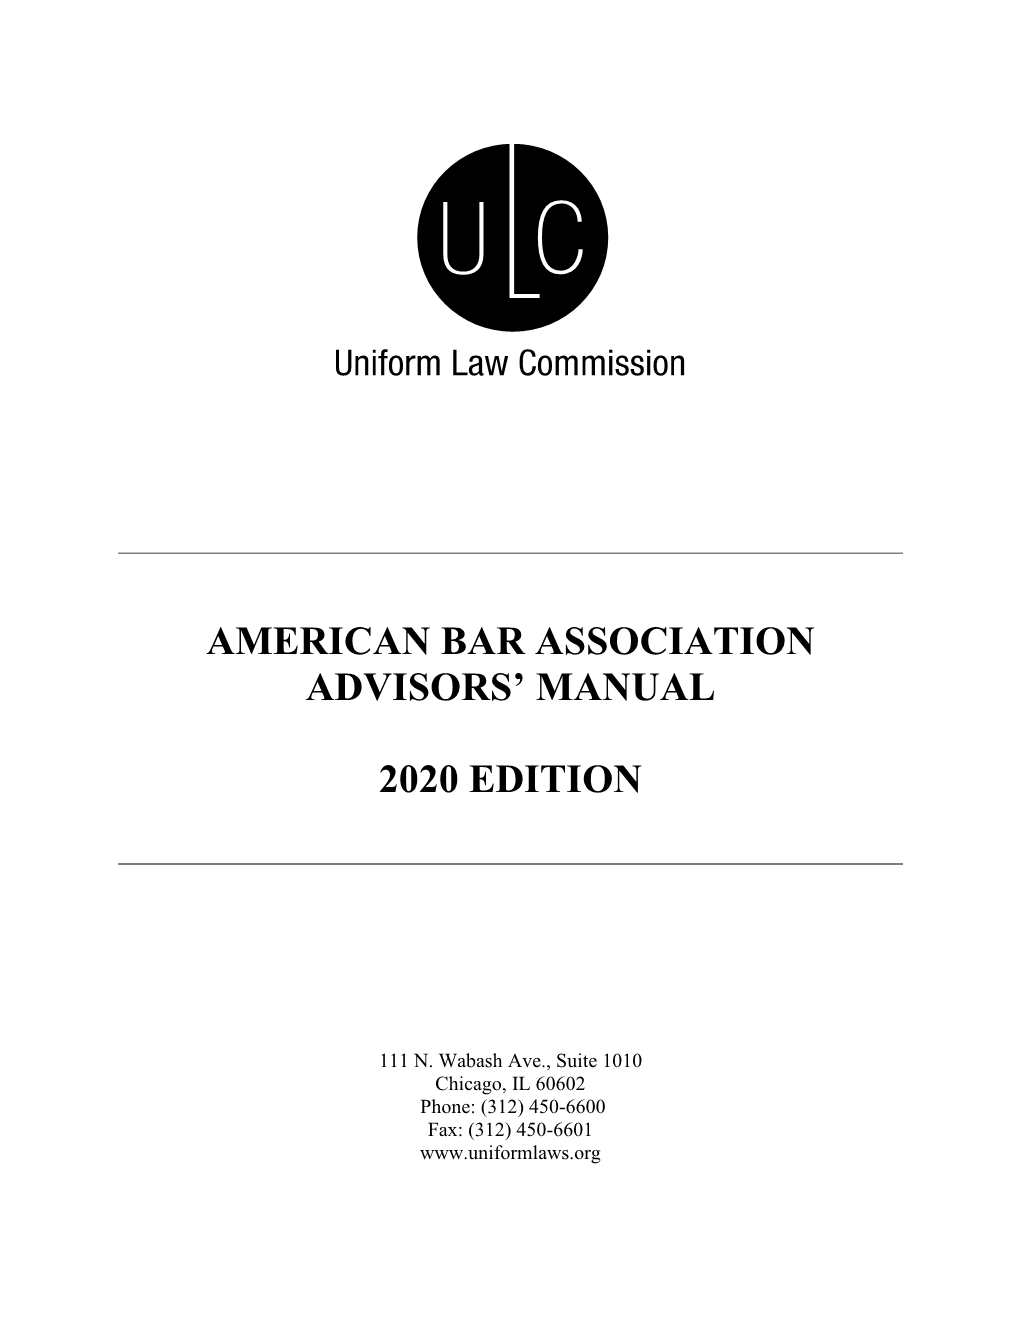 American Bar Association Advisors' Manual